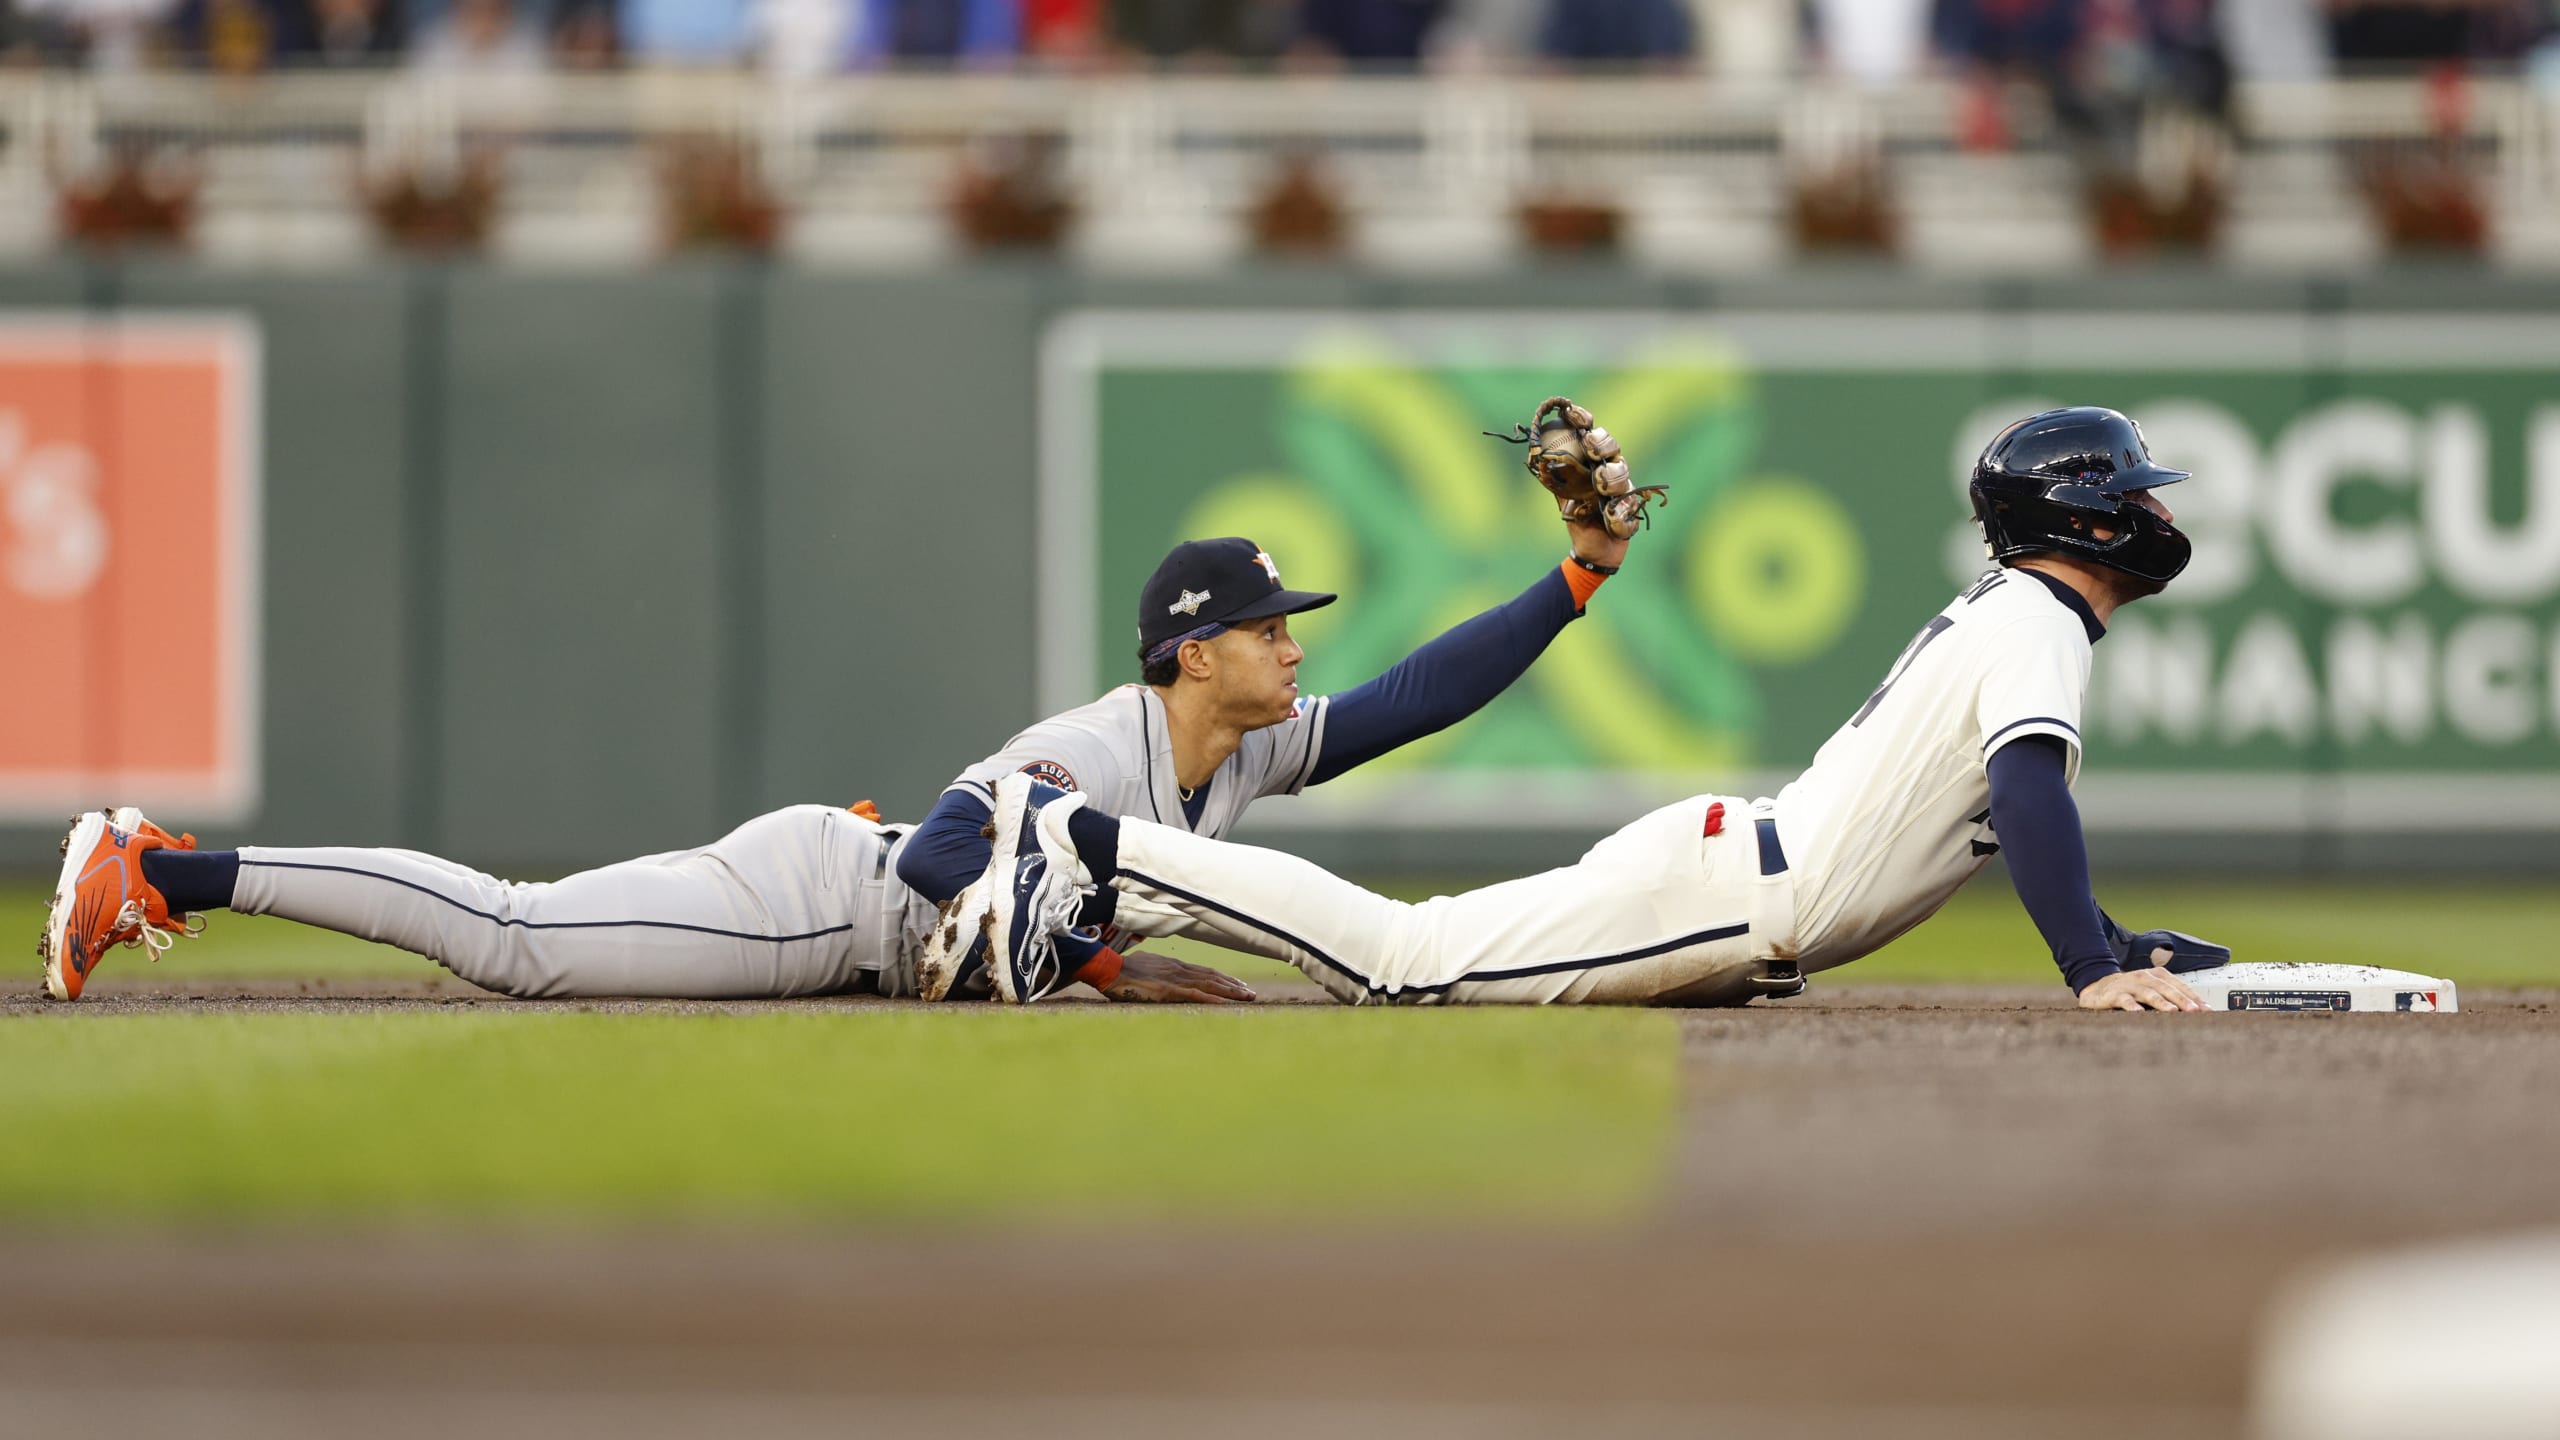 Marlins 9-29 Braves: Atlanta fall one run shy of modern MLB